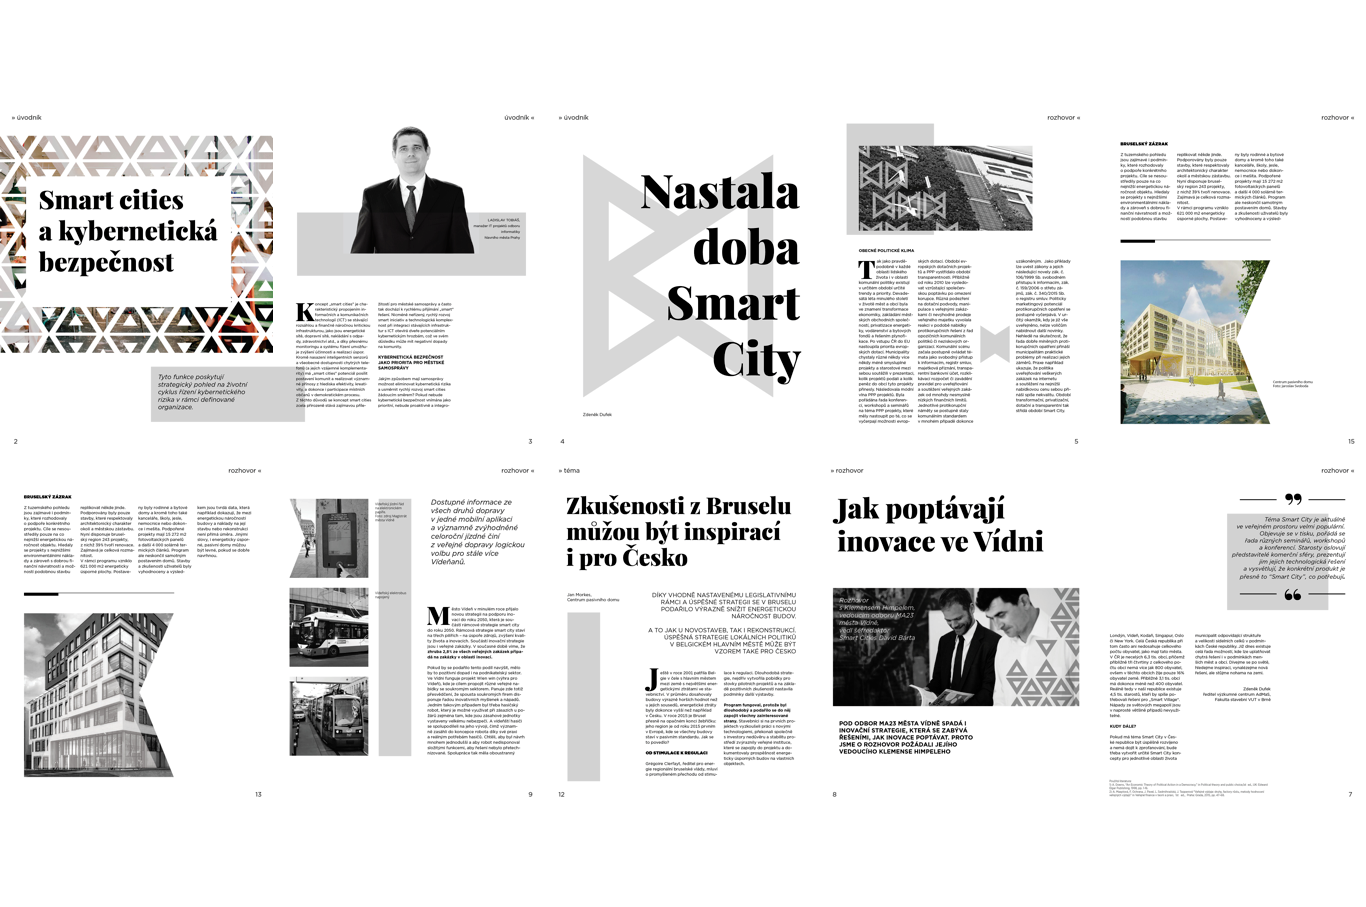 smartcities magazine content